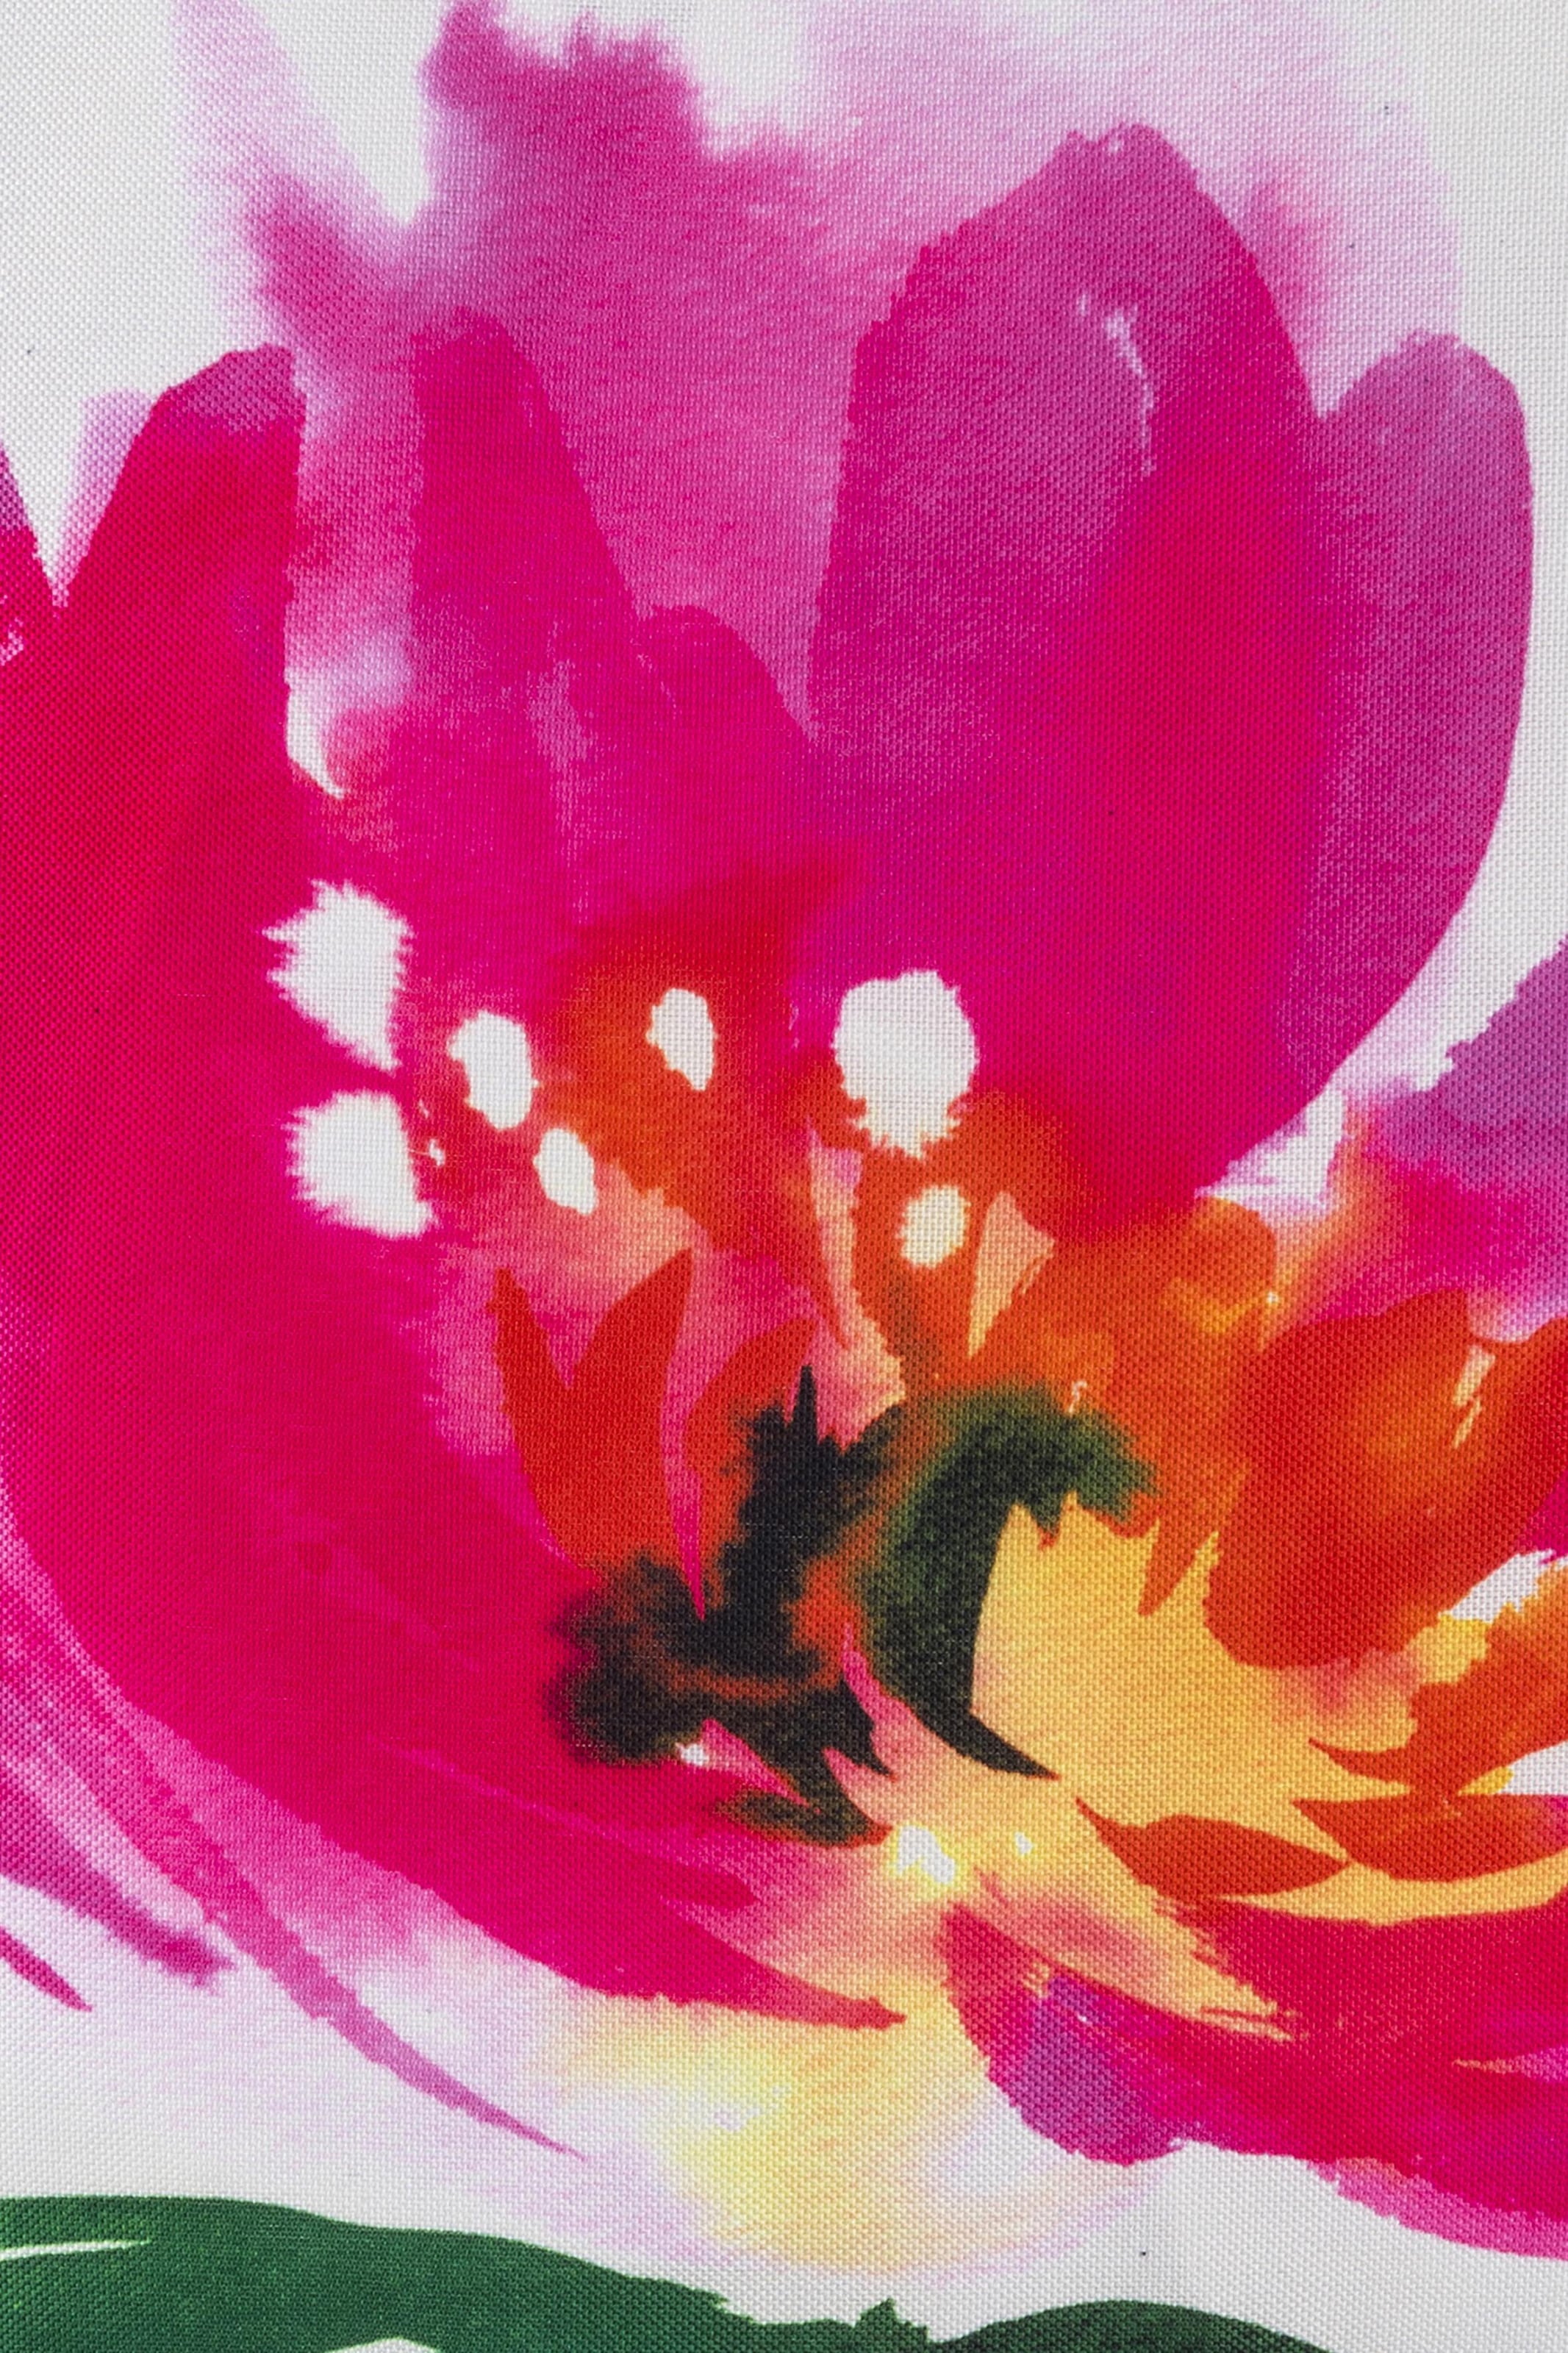 freundin Home Collection Dekokissen »Summer Breeze 04 weiss-bunt«, Kissen mit Polyesterfüllung mit floralem Digitaldruckmotiv, 45x45 cm